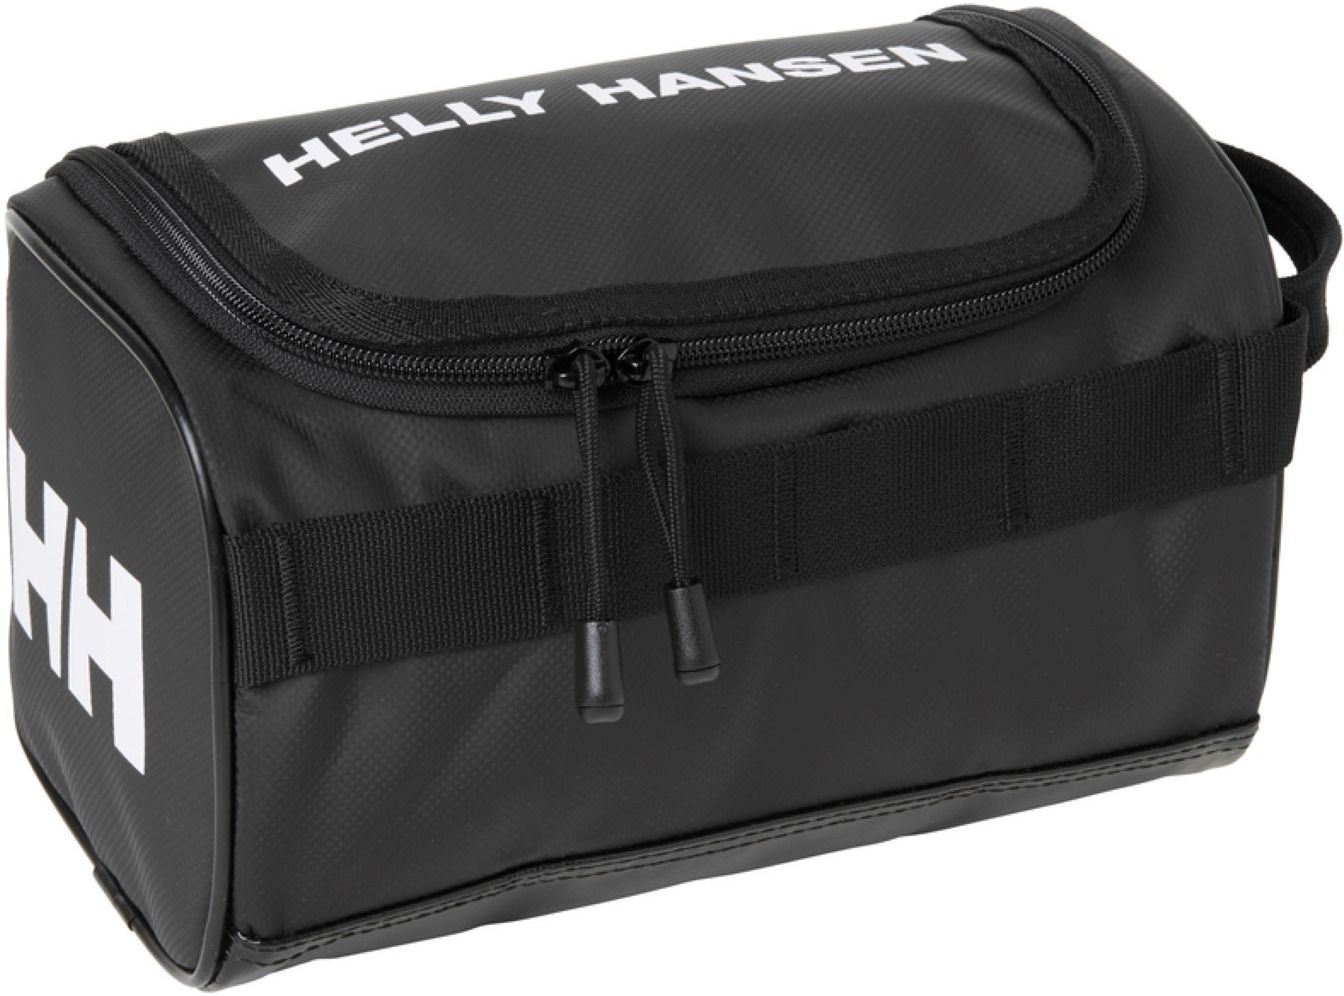  Helly Hansen Hh Classic Wash Bag, 67170_990, 